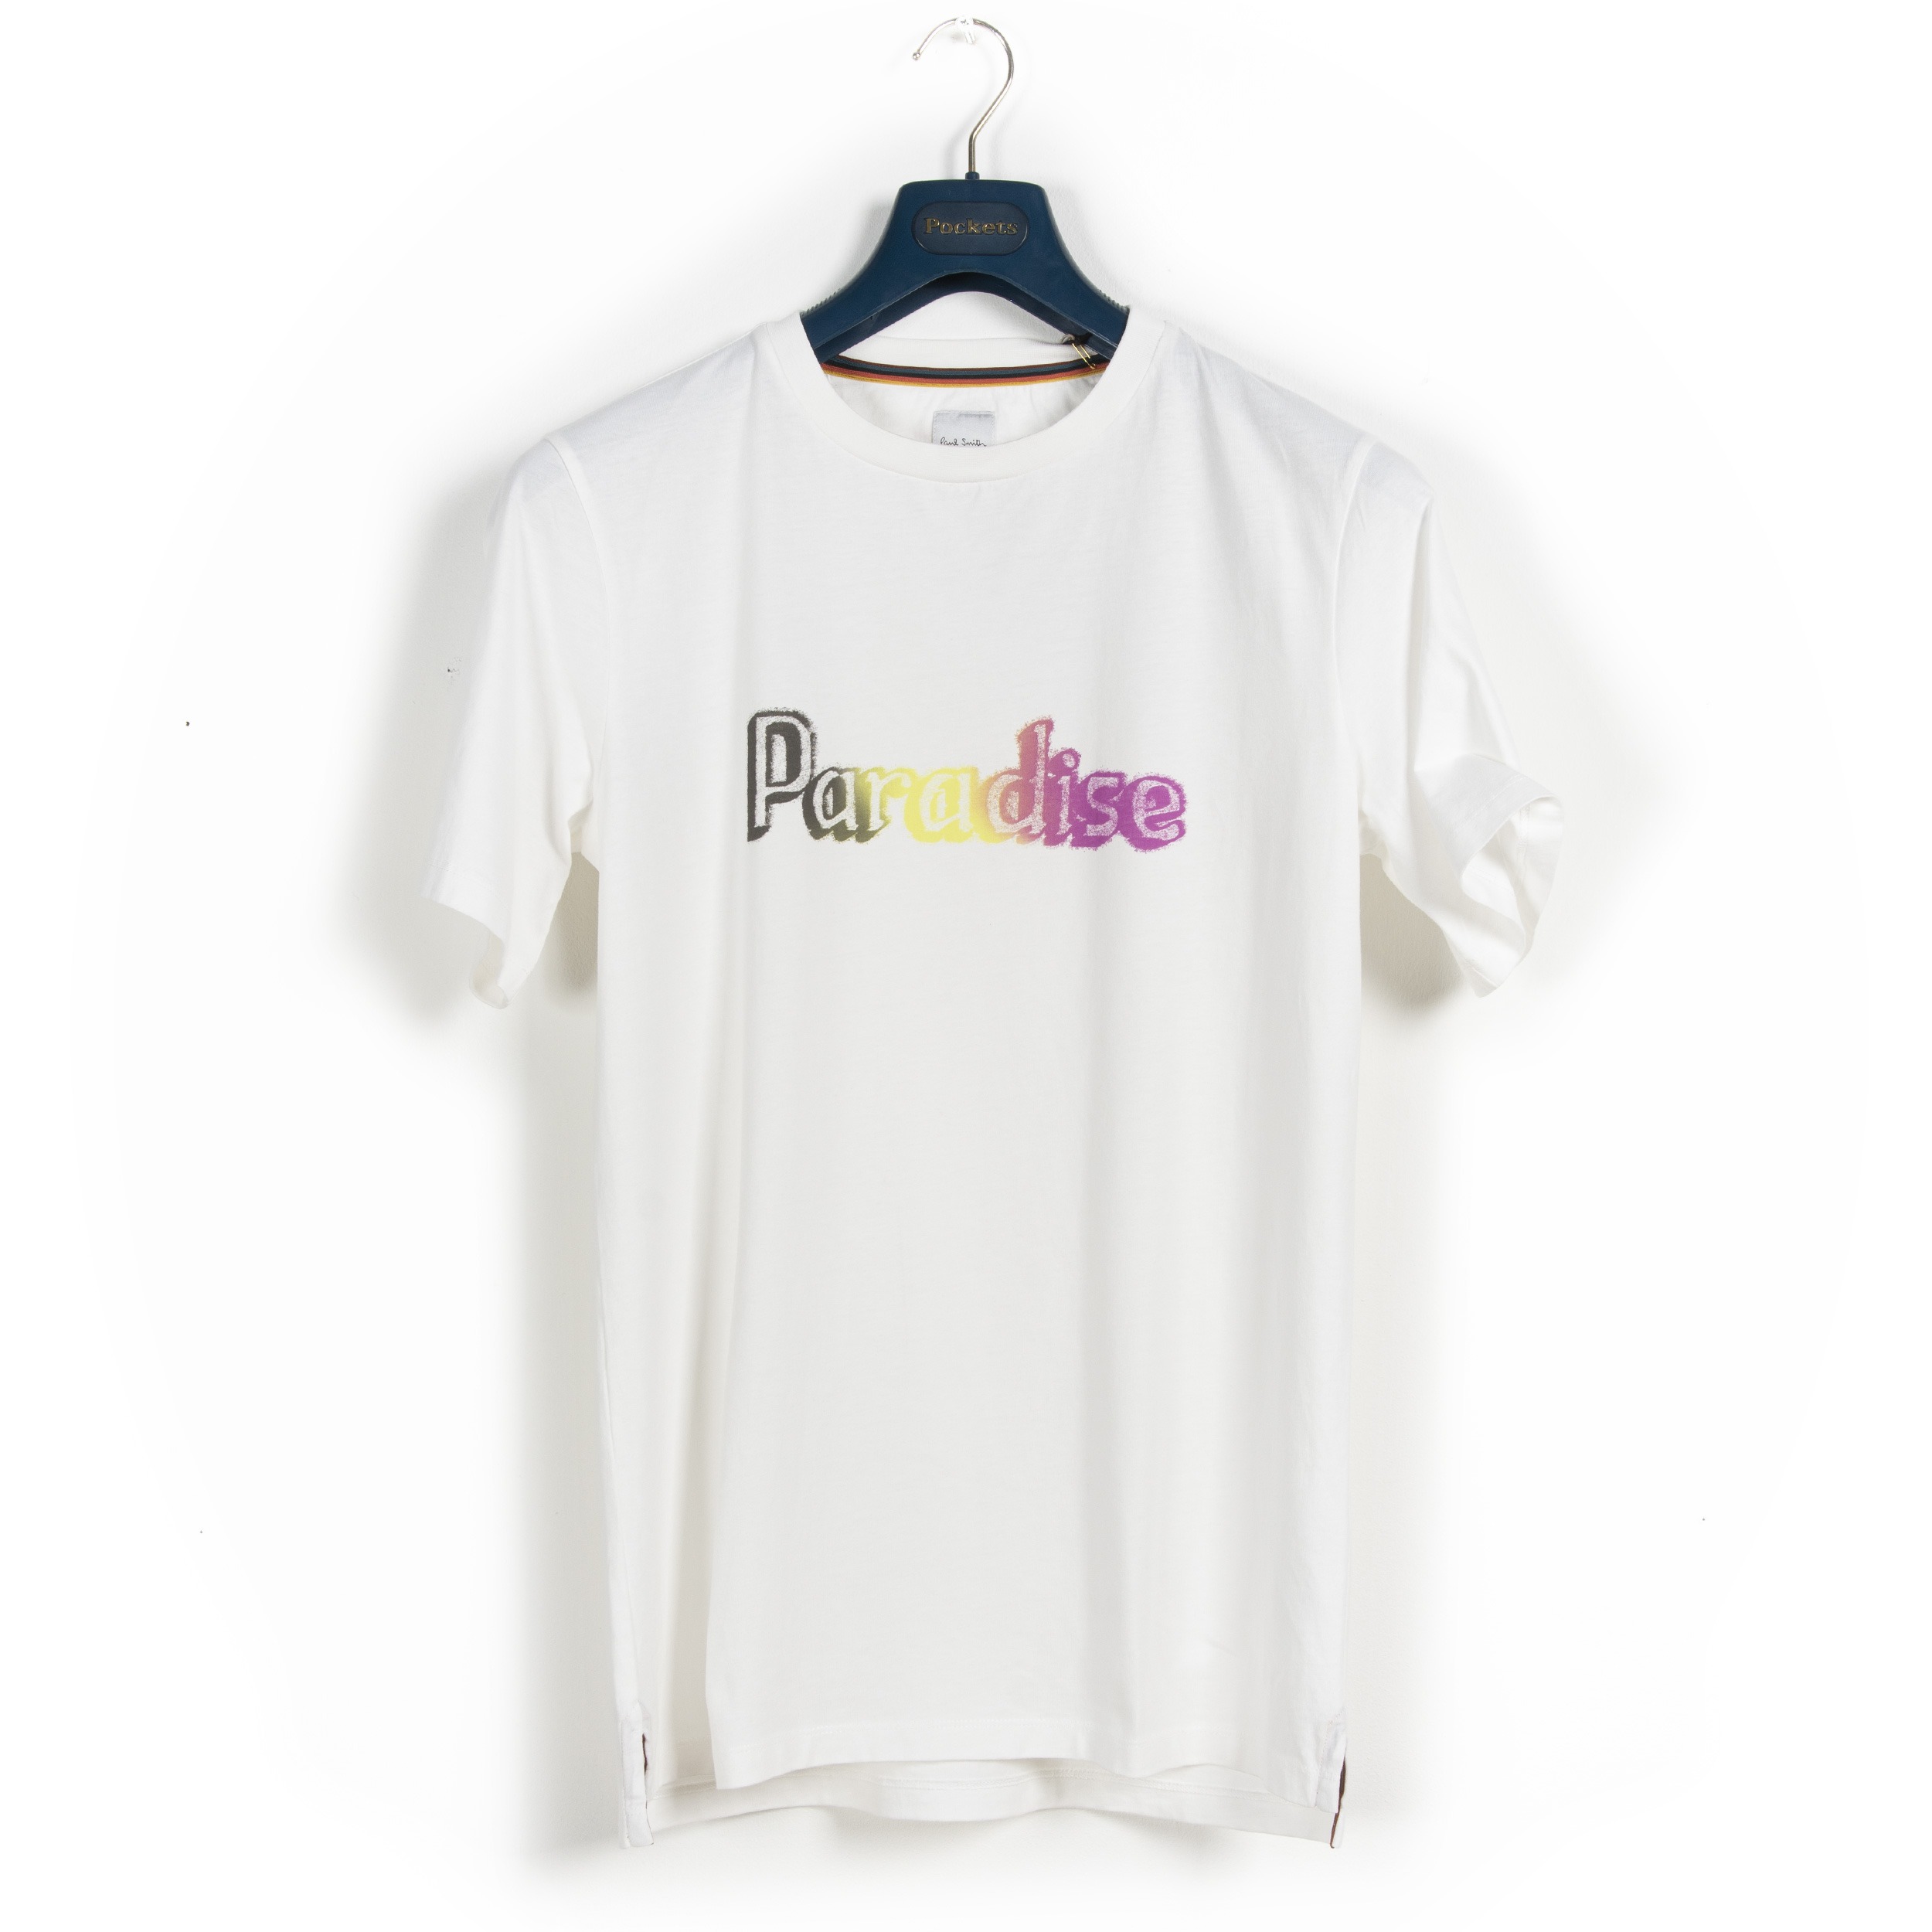 Paul Smith ’Paradise’ Print T-Shirt White